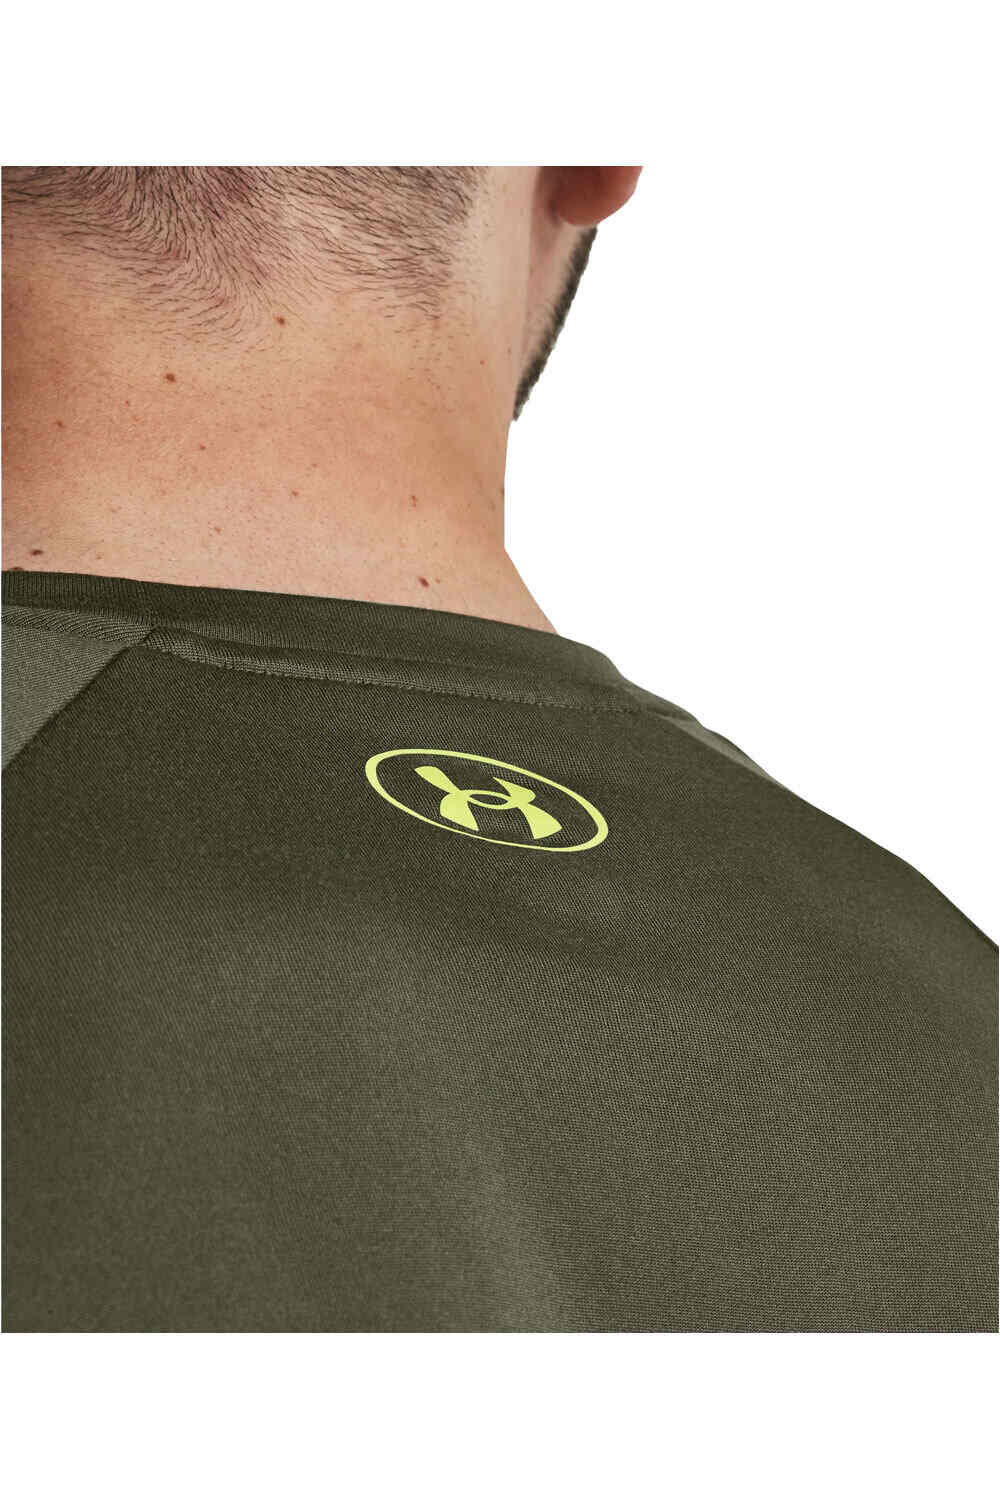 Under Armour camiseta fitness hombre UA Tech Prt Fill SS vista detalle